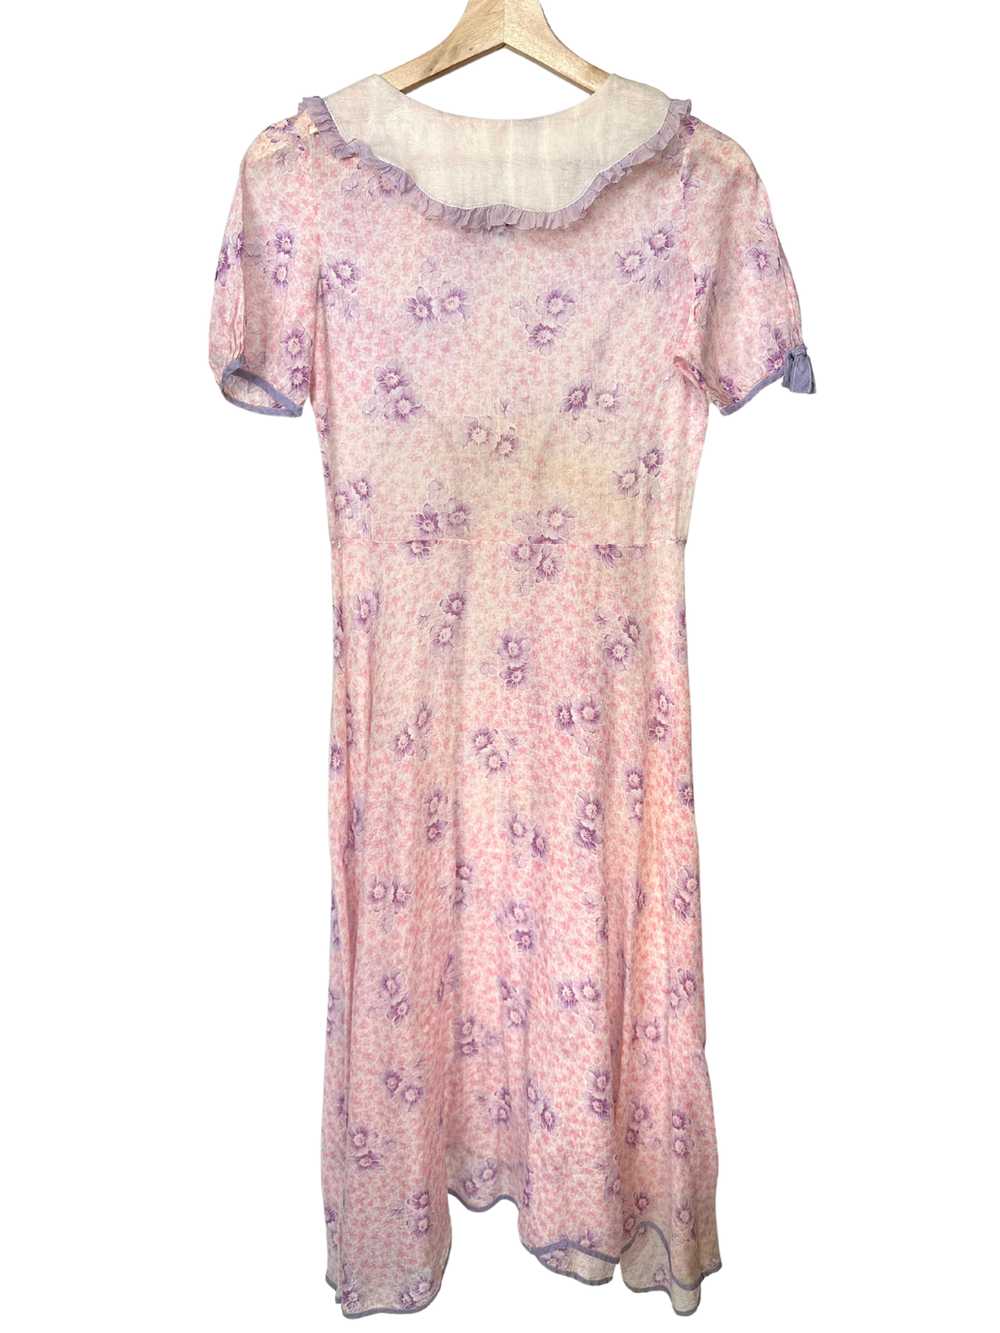 Vintage 1930s Pink Floral Cotton Dress - S - image 3